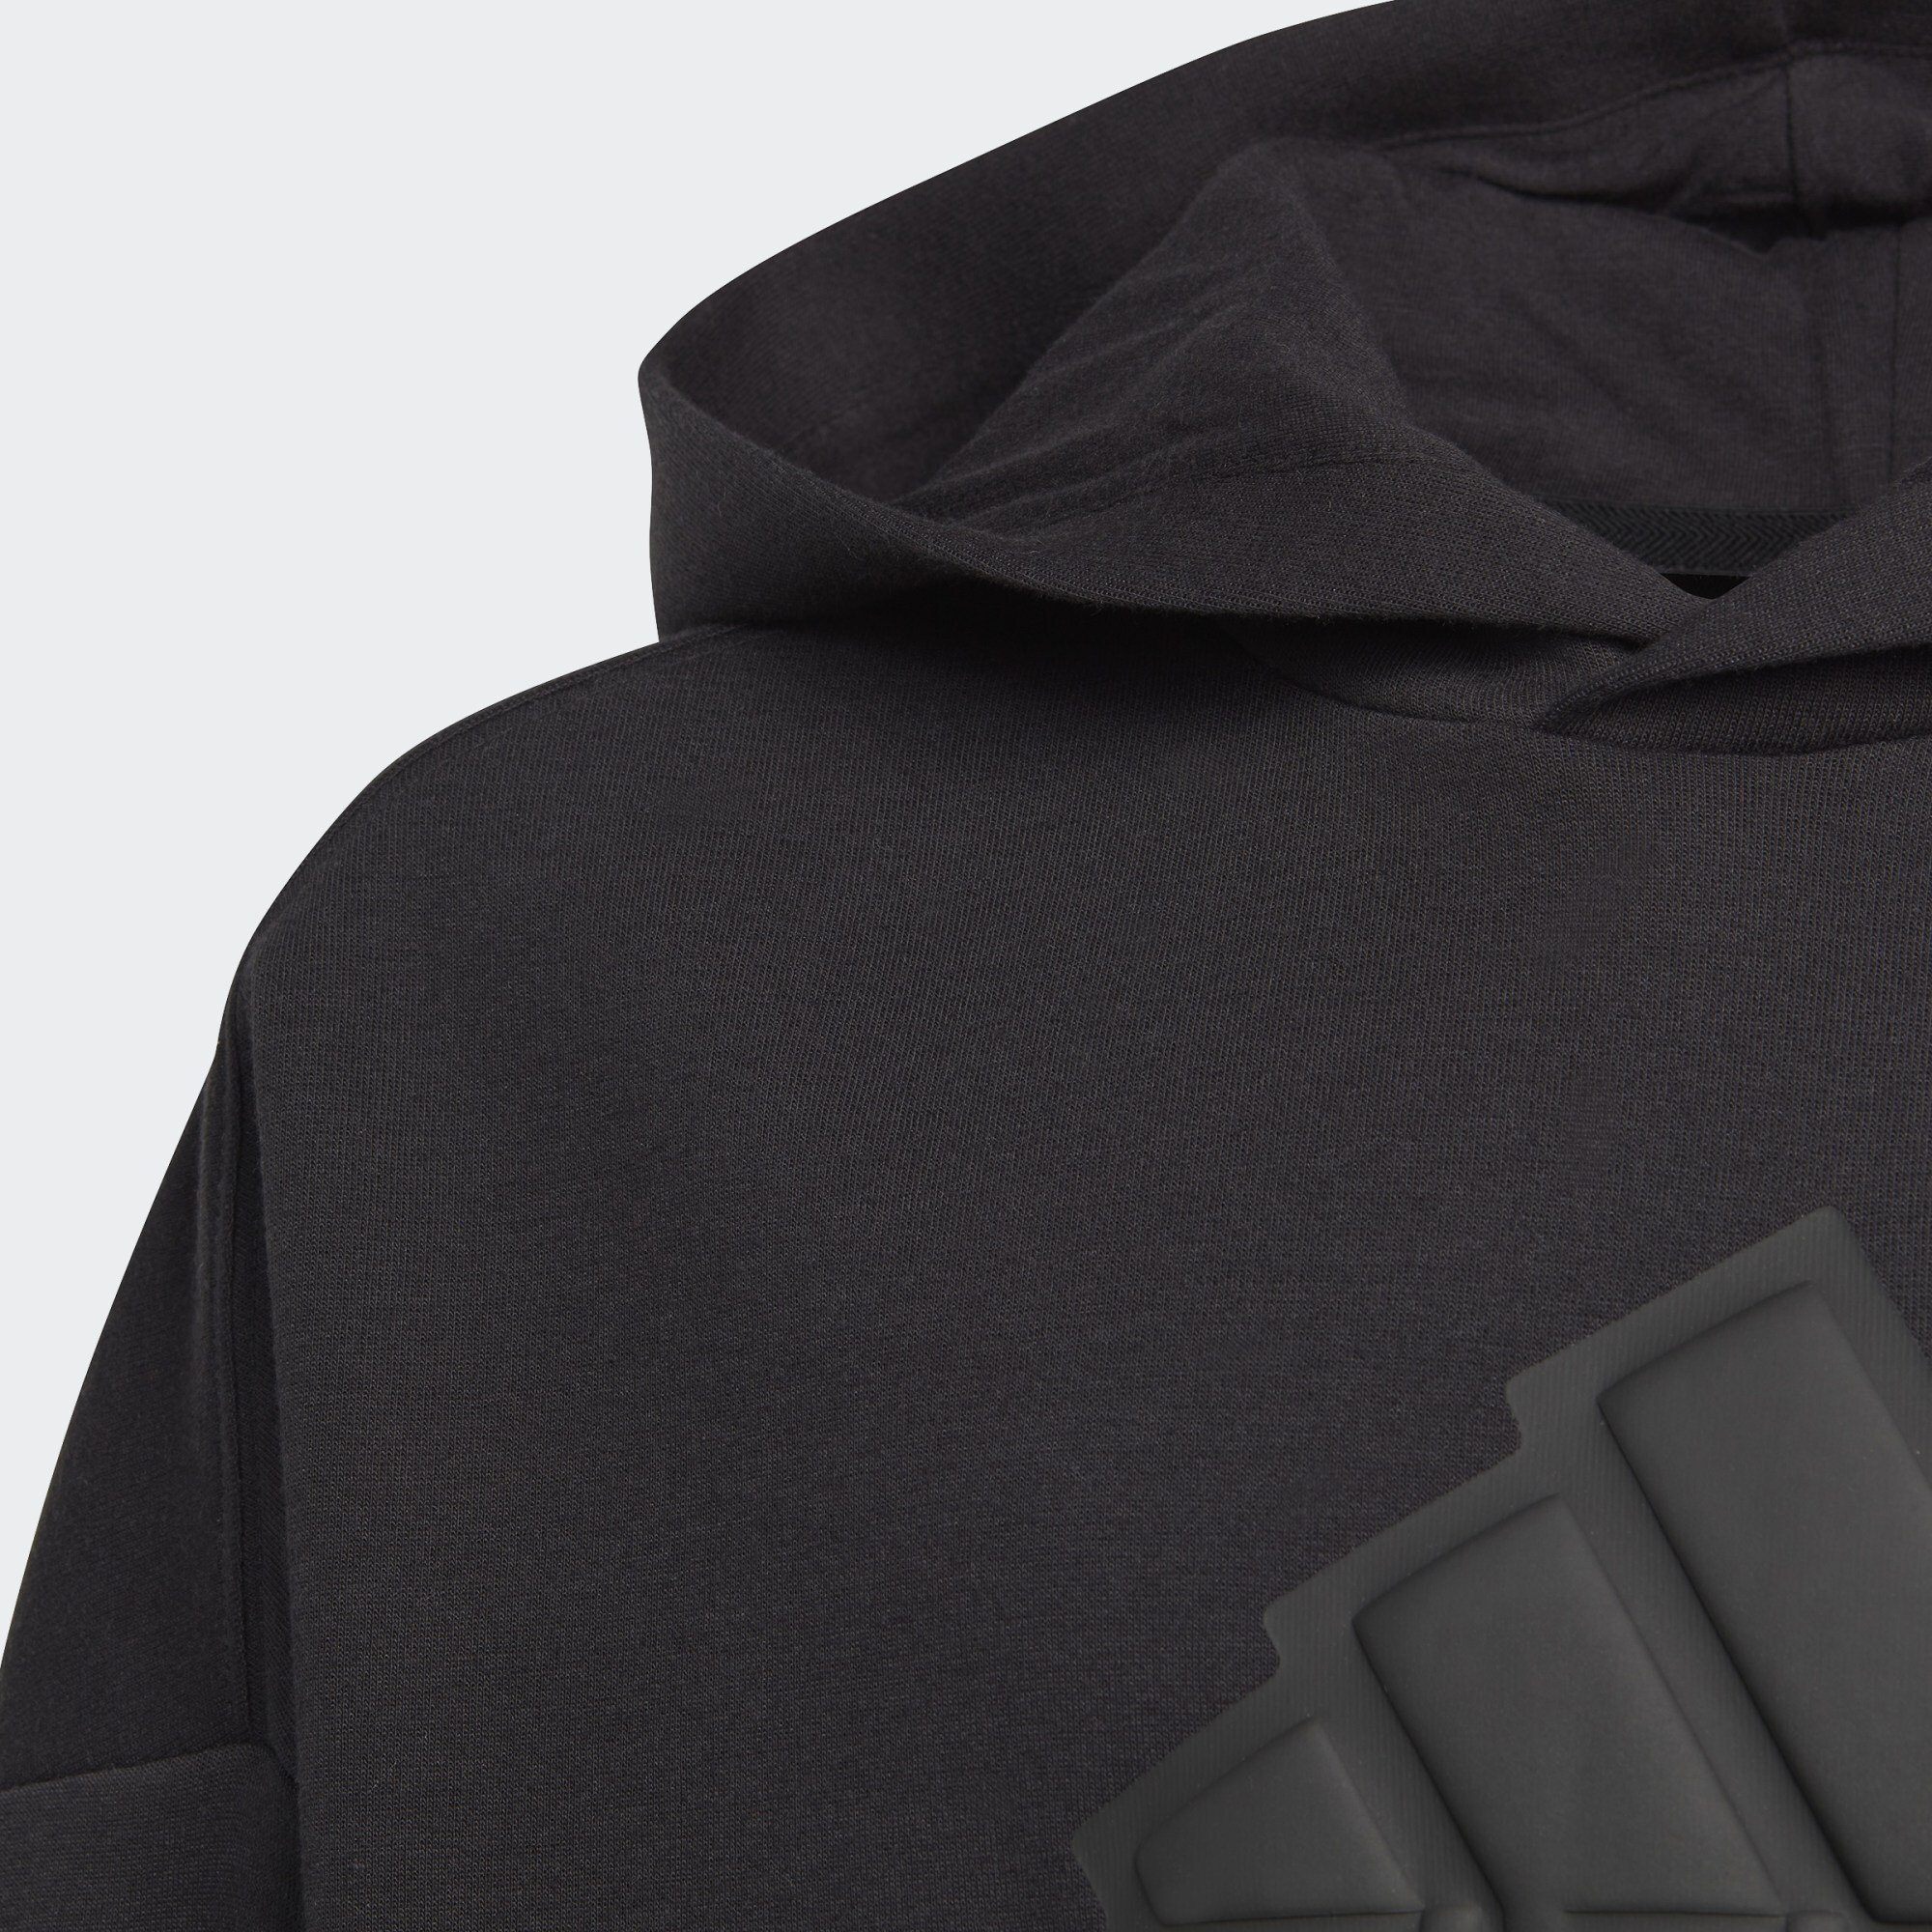 Black FUTURE Sportswear HOODIE / Black Hoodie ICONS LOGO adidas